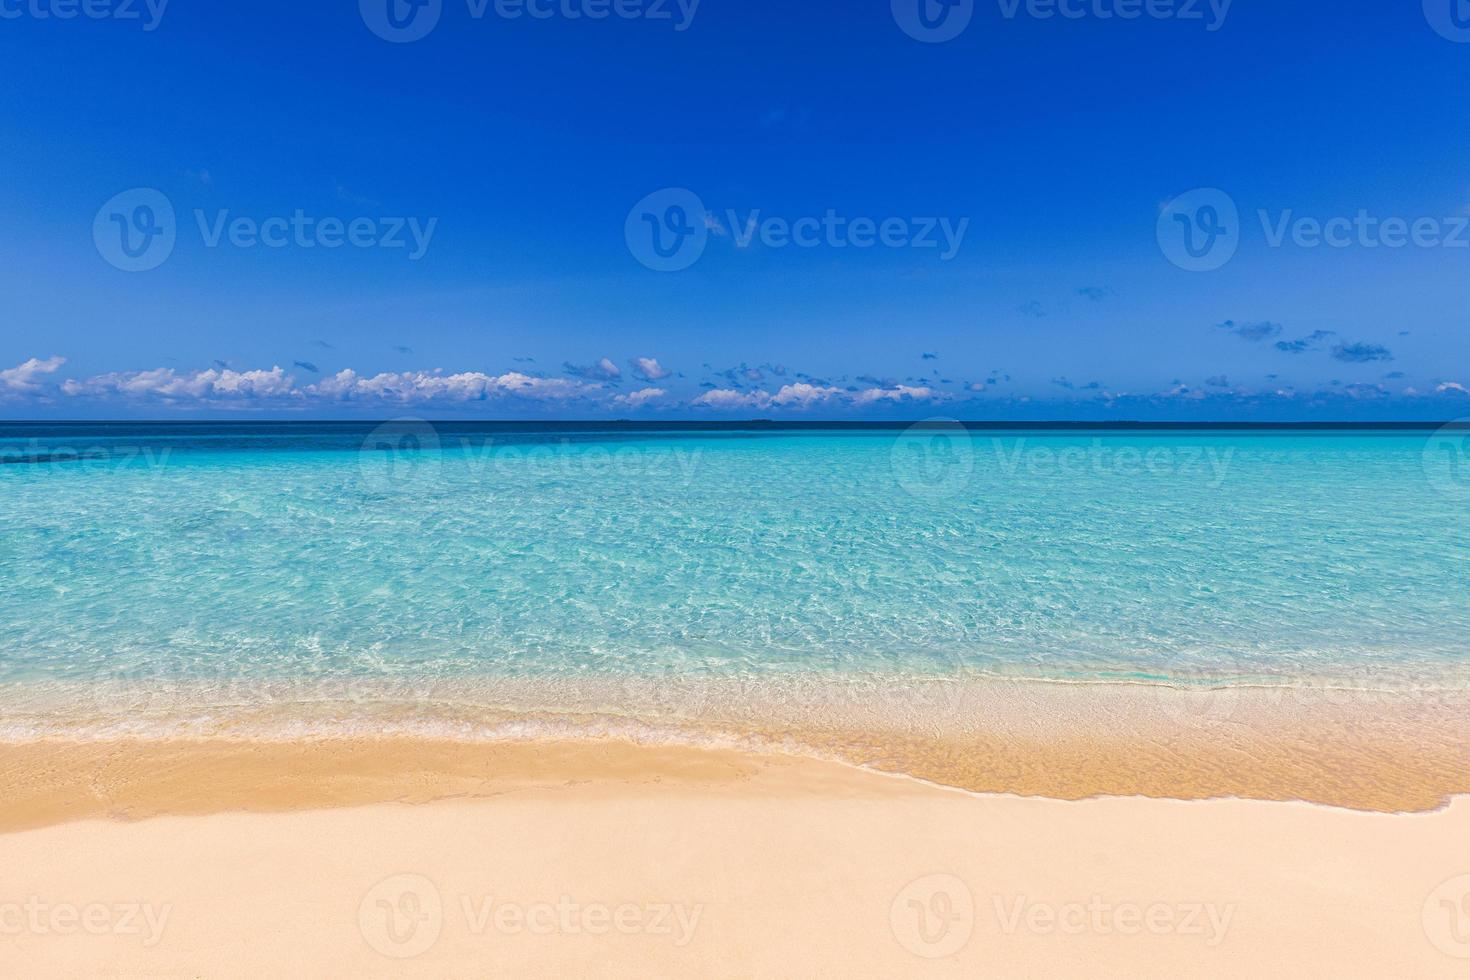 detailopname van zand Aan strand en blauw zomer lucht. panoramisch strand landschap. leeg tropisch strand en zeegezicht. zonnig blauw lucht, zacht zand, rust, rustig ontspannende zonlicht, zomer humeur. golven kust foto